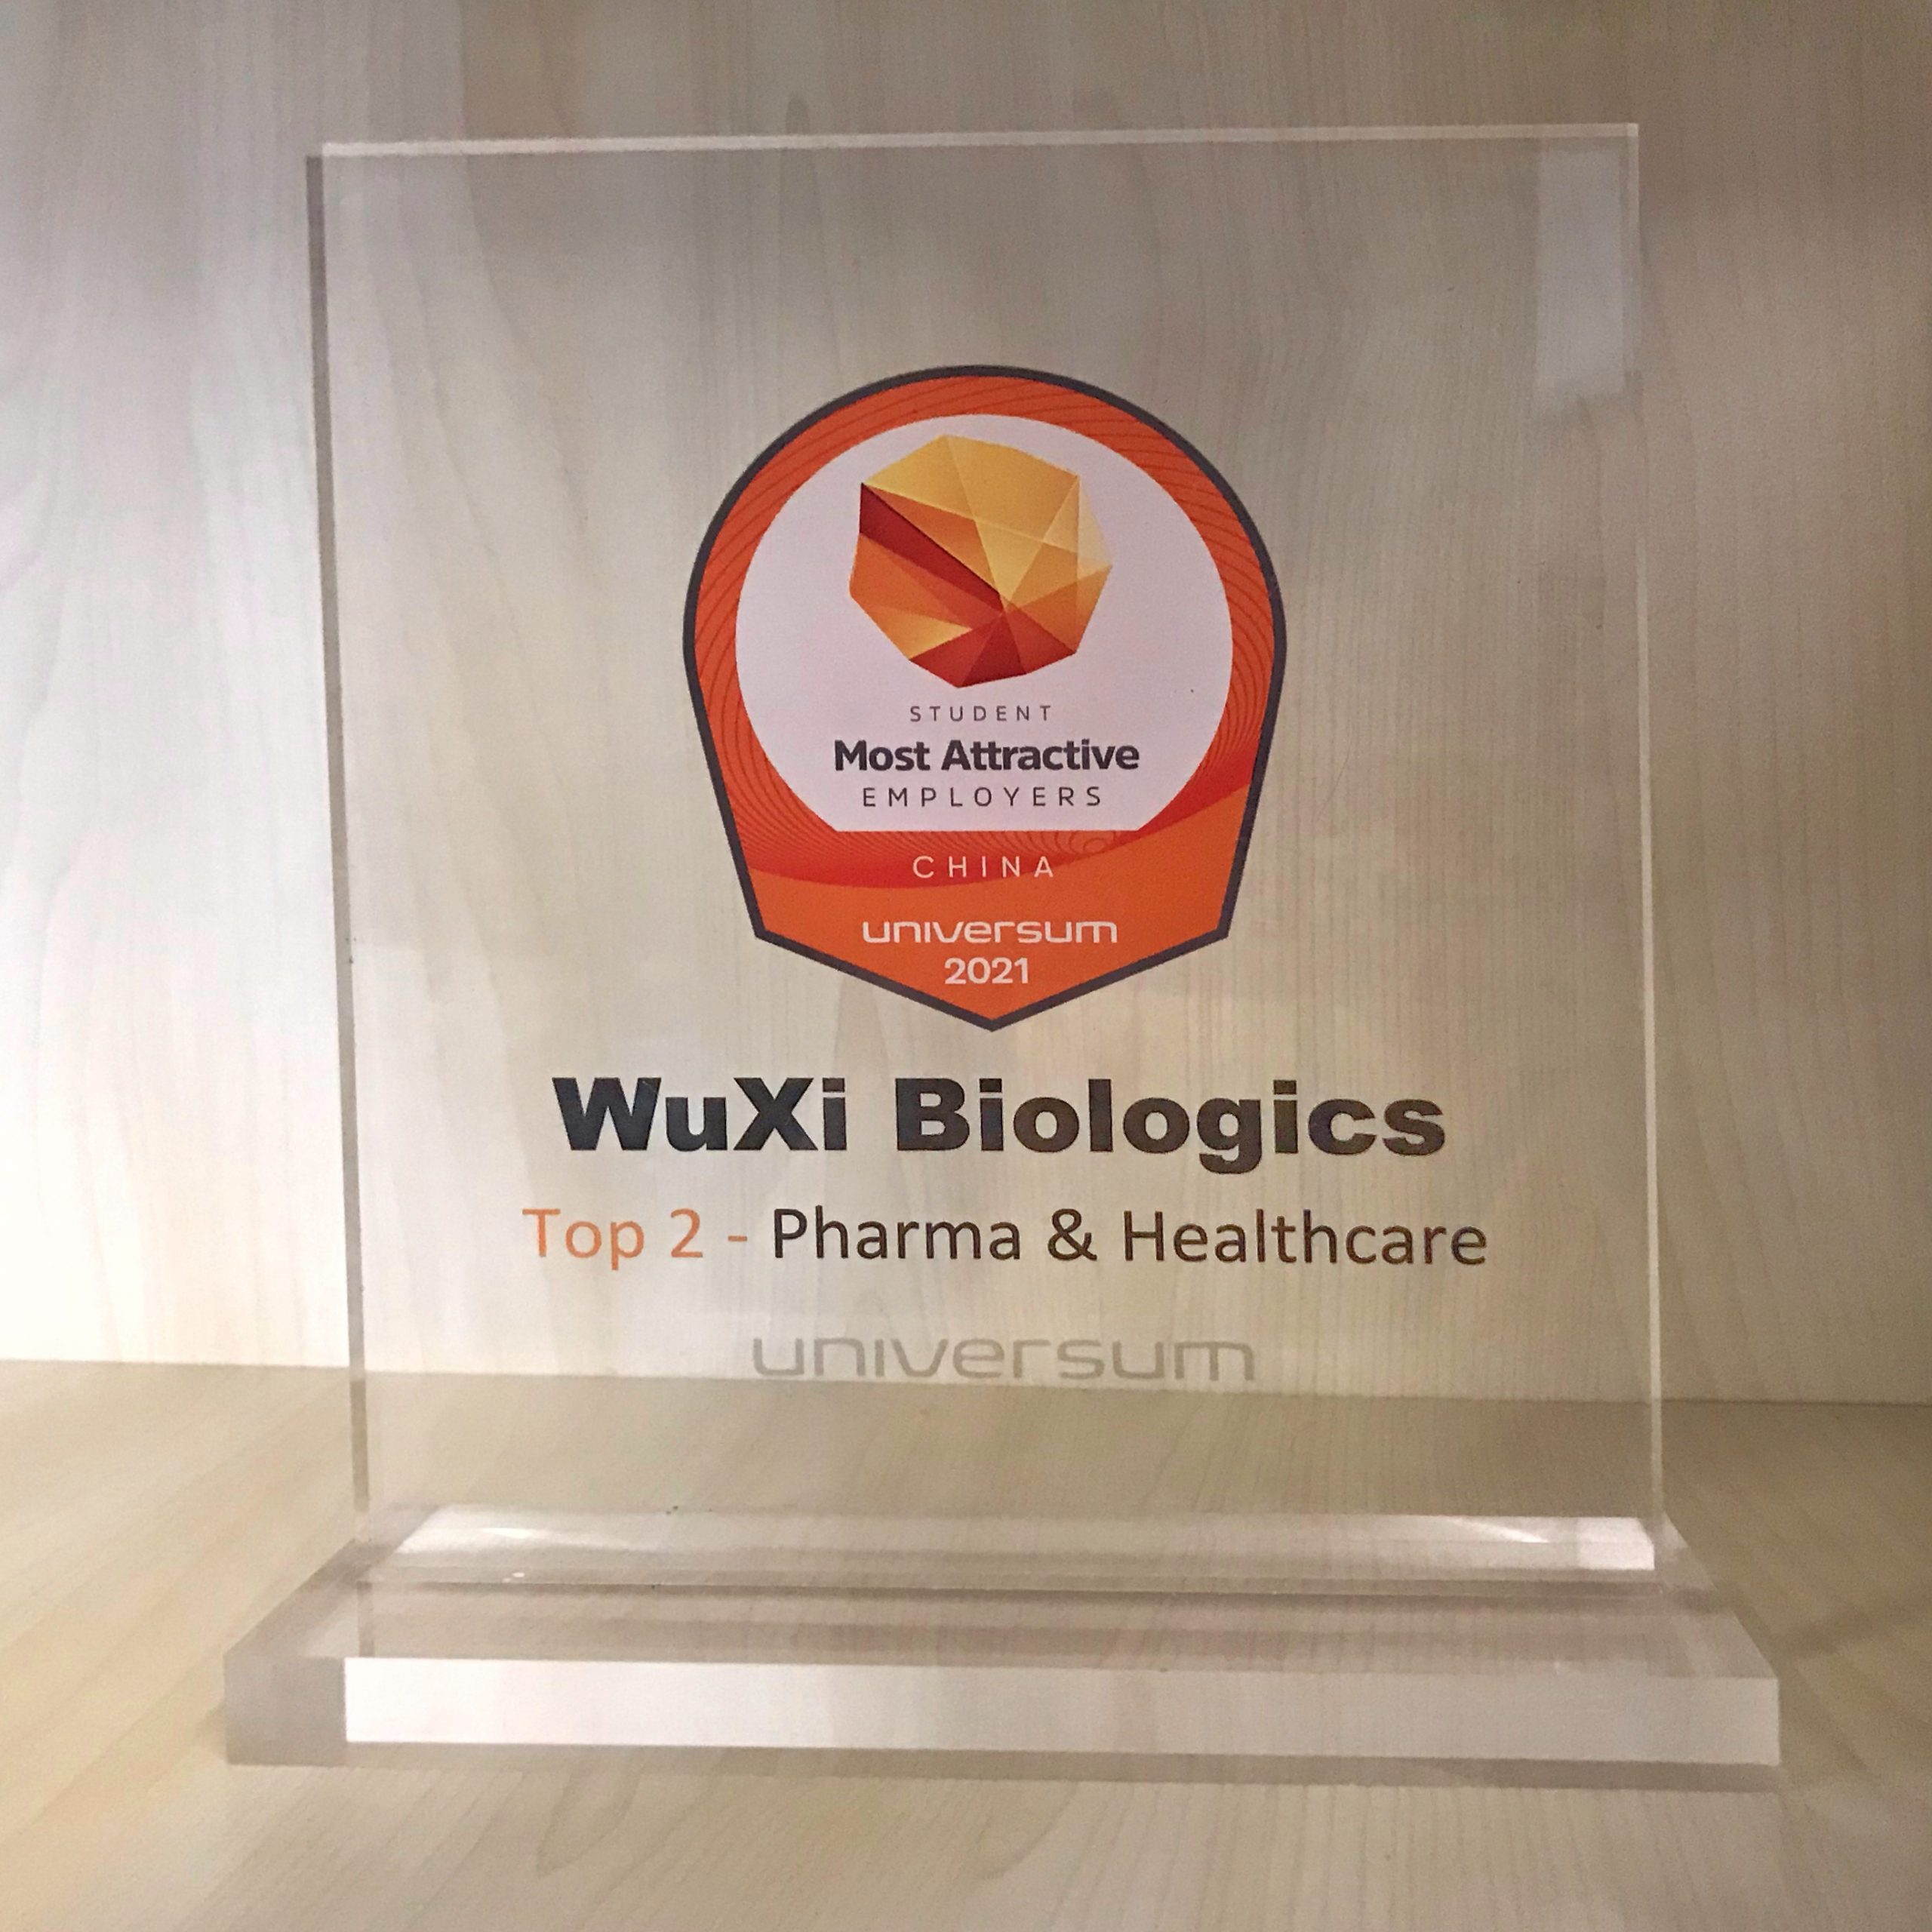 WuXi-Biologics-top2-Pharma-Healthcare-universum